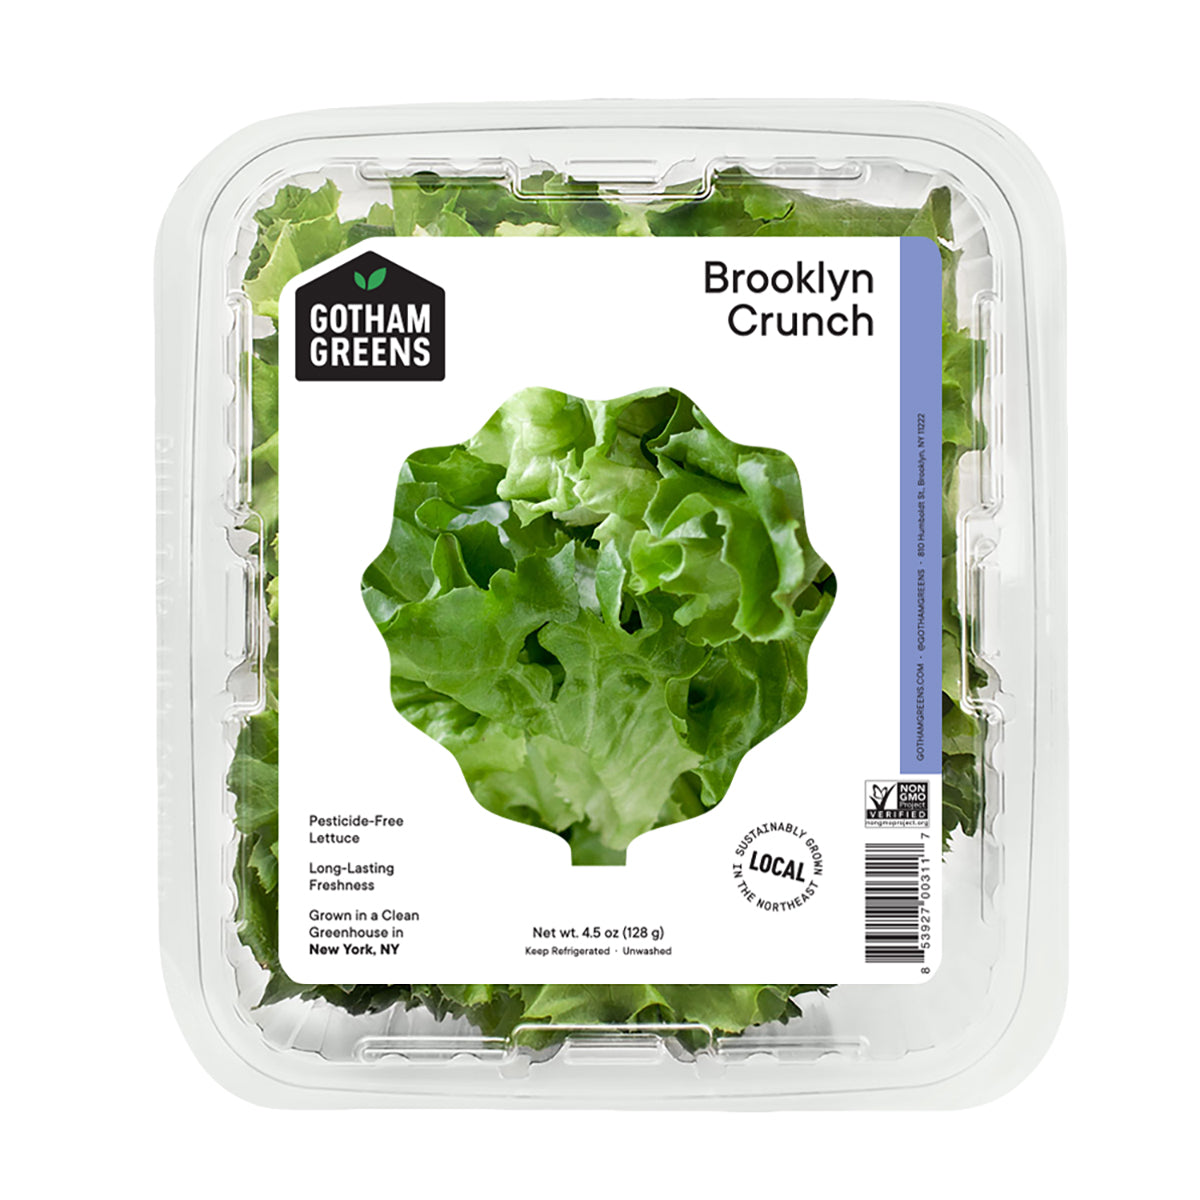 Butterhead Lettuce, 4.5 oz, Gotham Greens